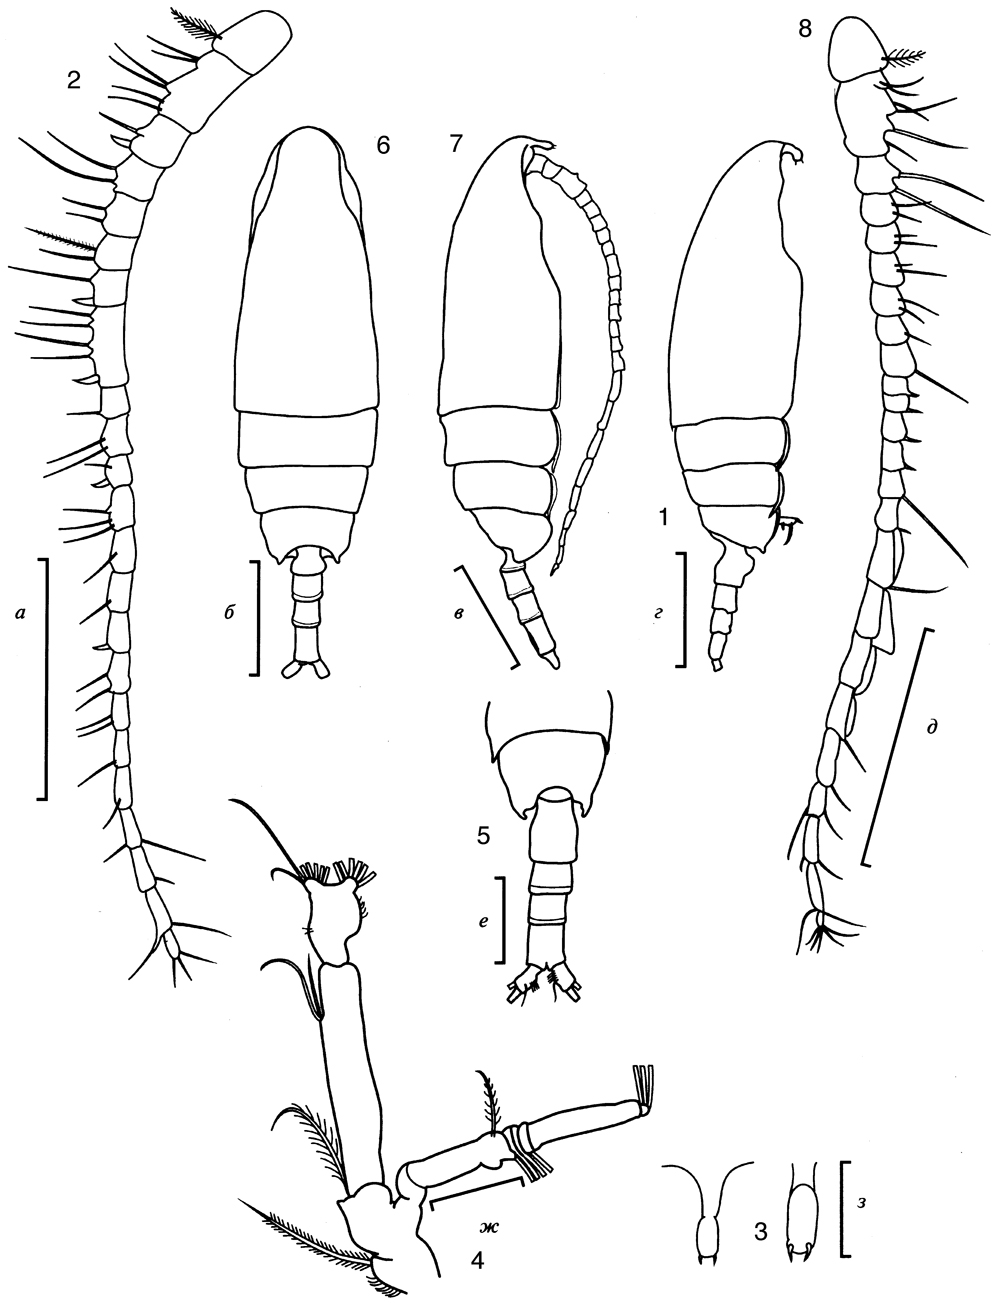 Species Racovitzanus antarcticus - Plate 13 of morphological figures